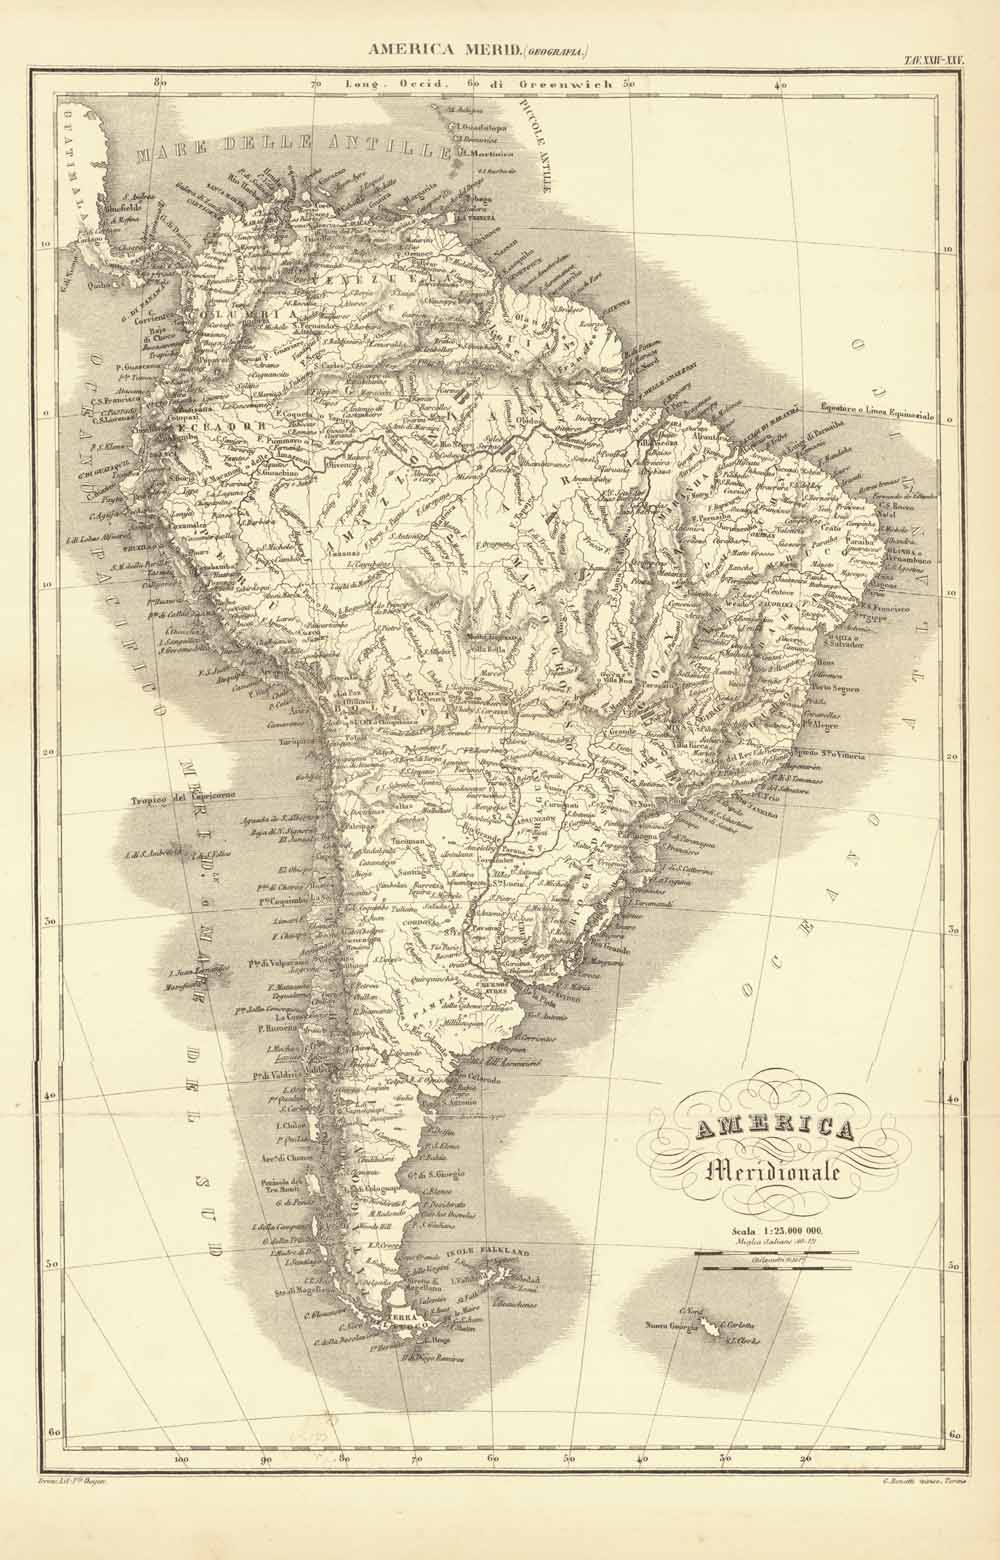 Maps, South America, America Meridionale, Bonatti, Falkland Islands, Islas Malvinas